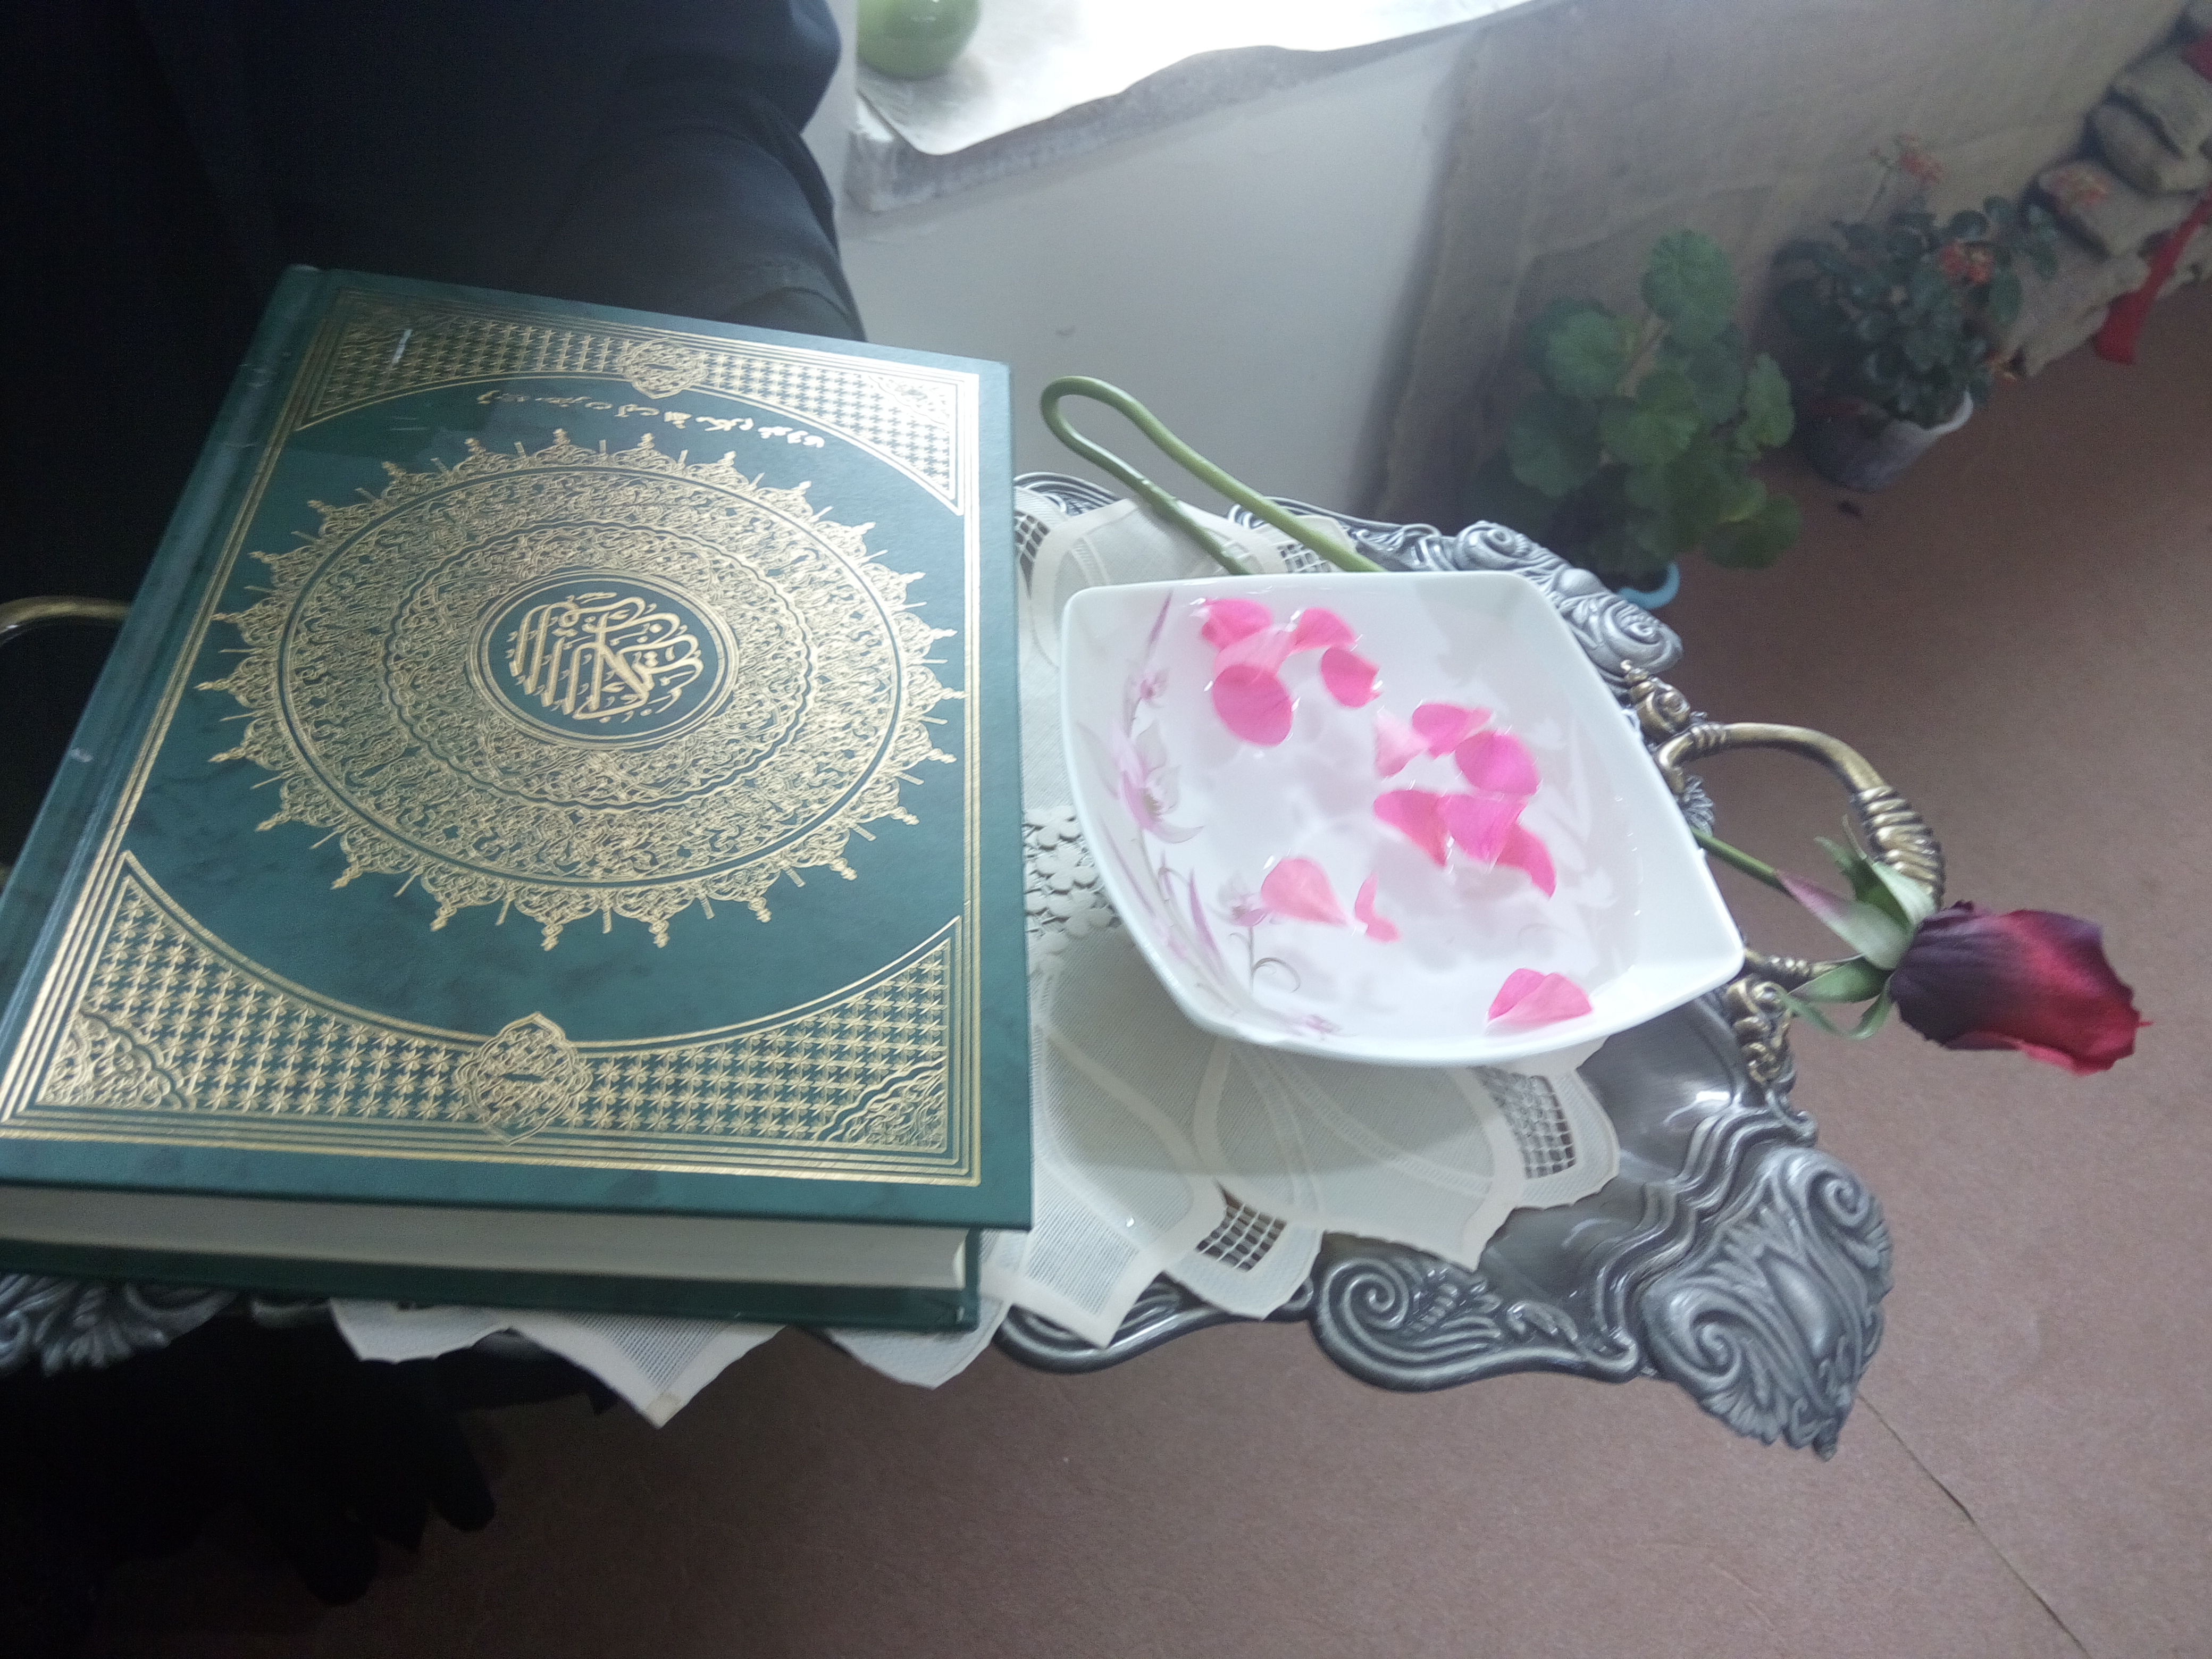 آب و قرآن